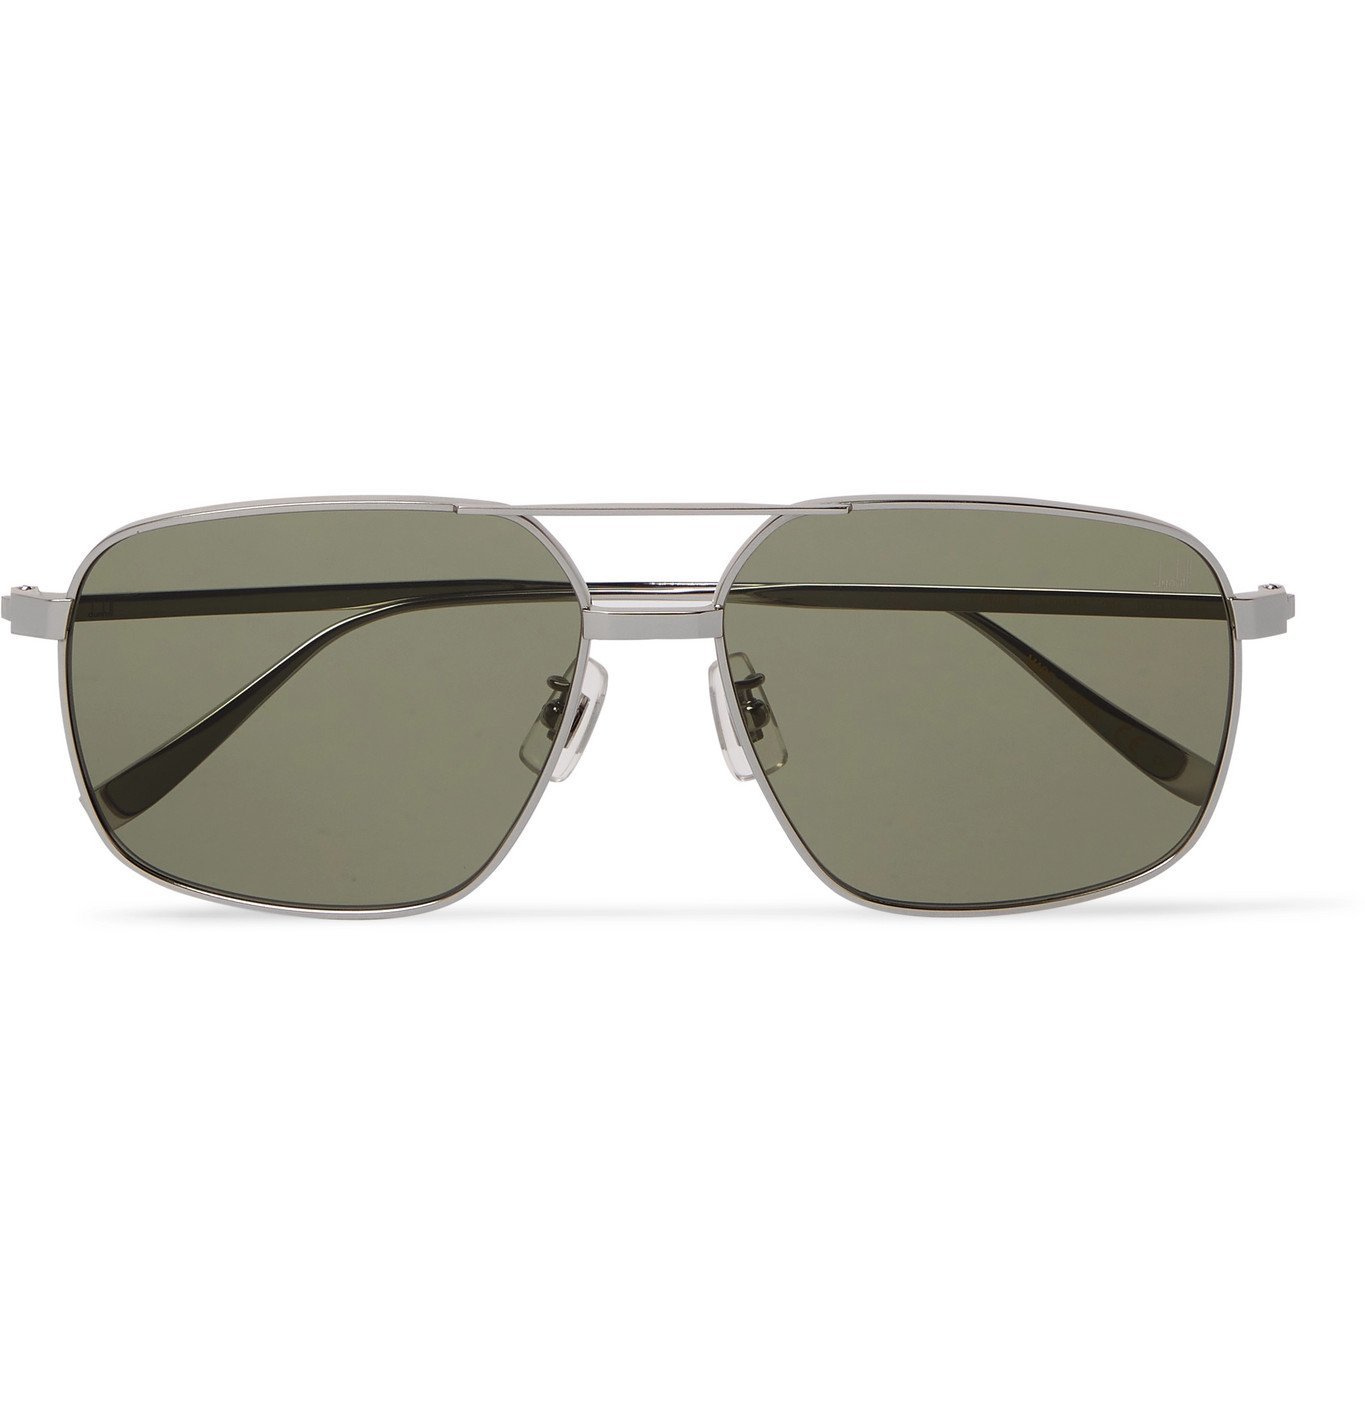 DUNHILL - Aviator-Style Gold-Tone and Tortoiseshell Acetate Sunglasses ...